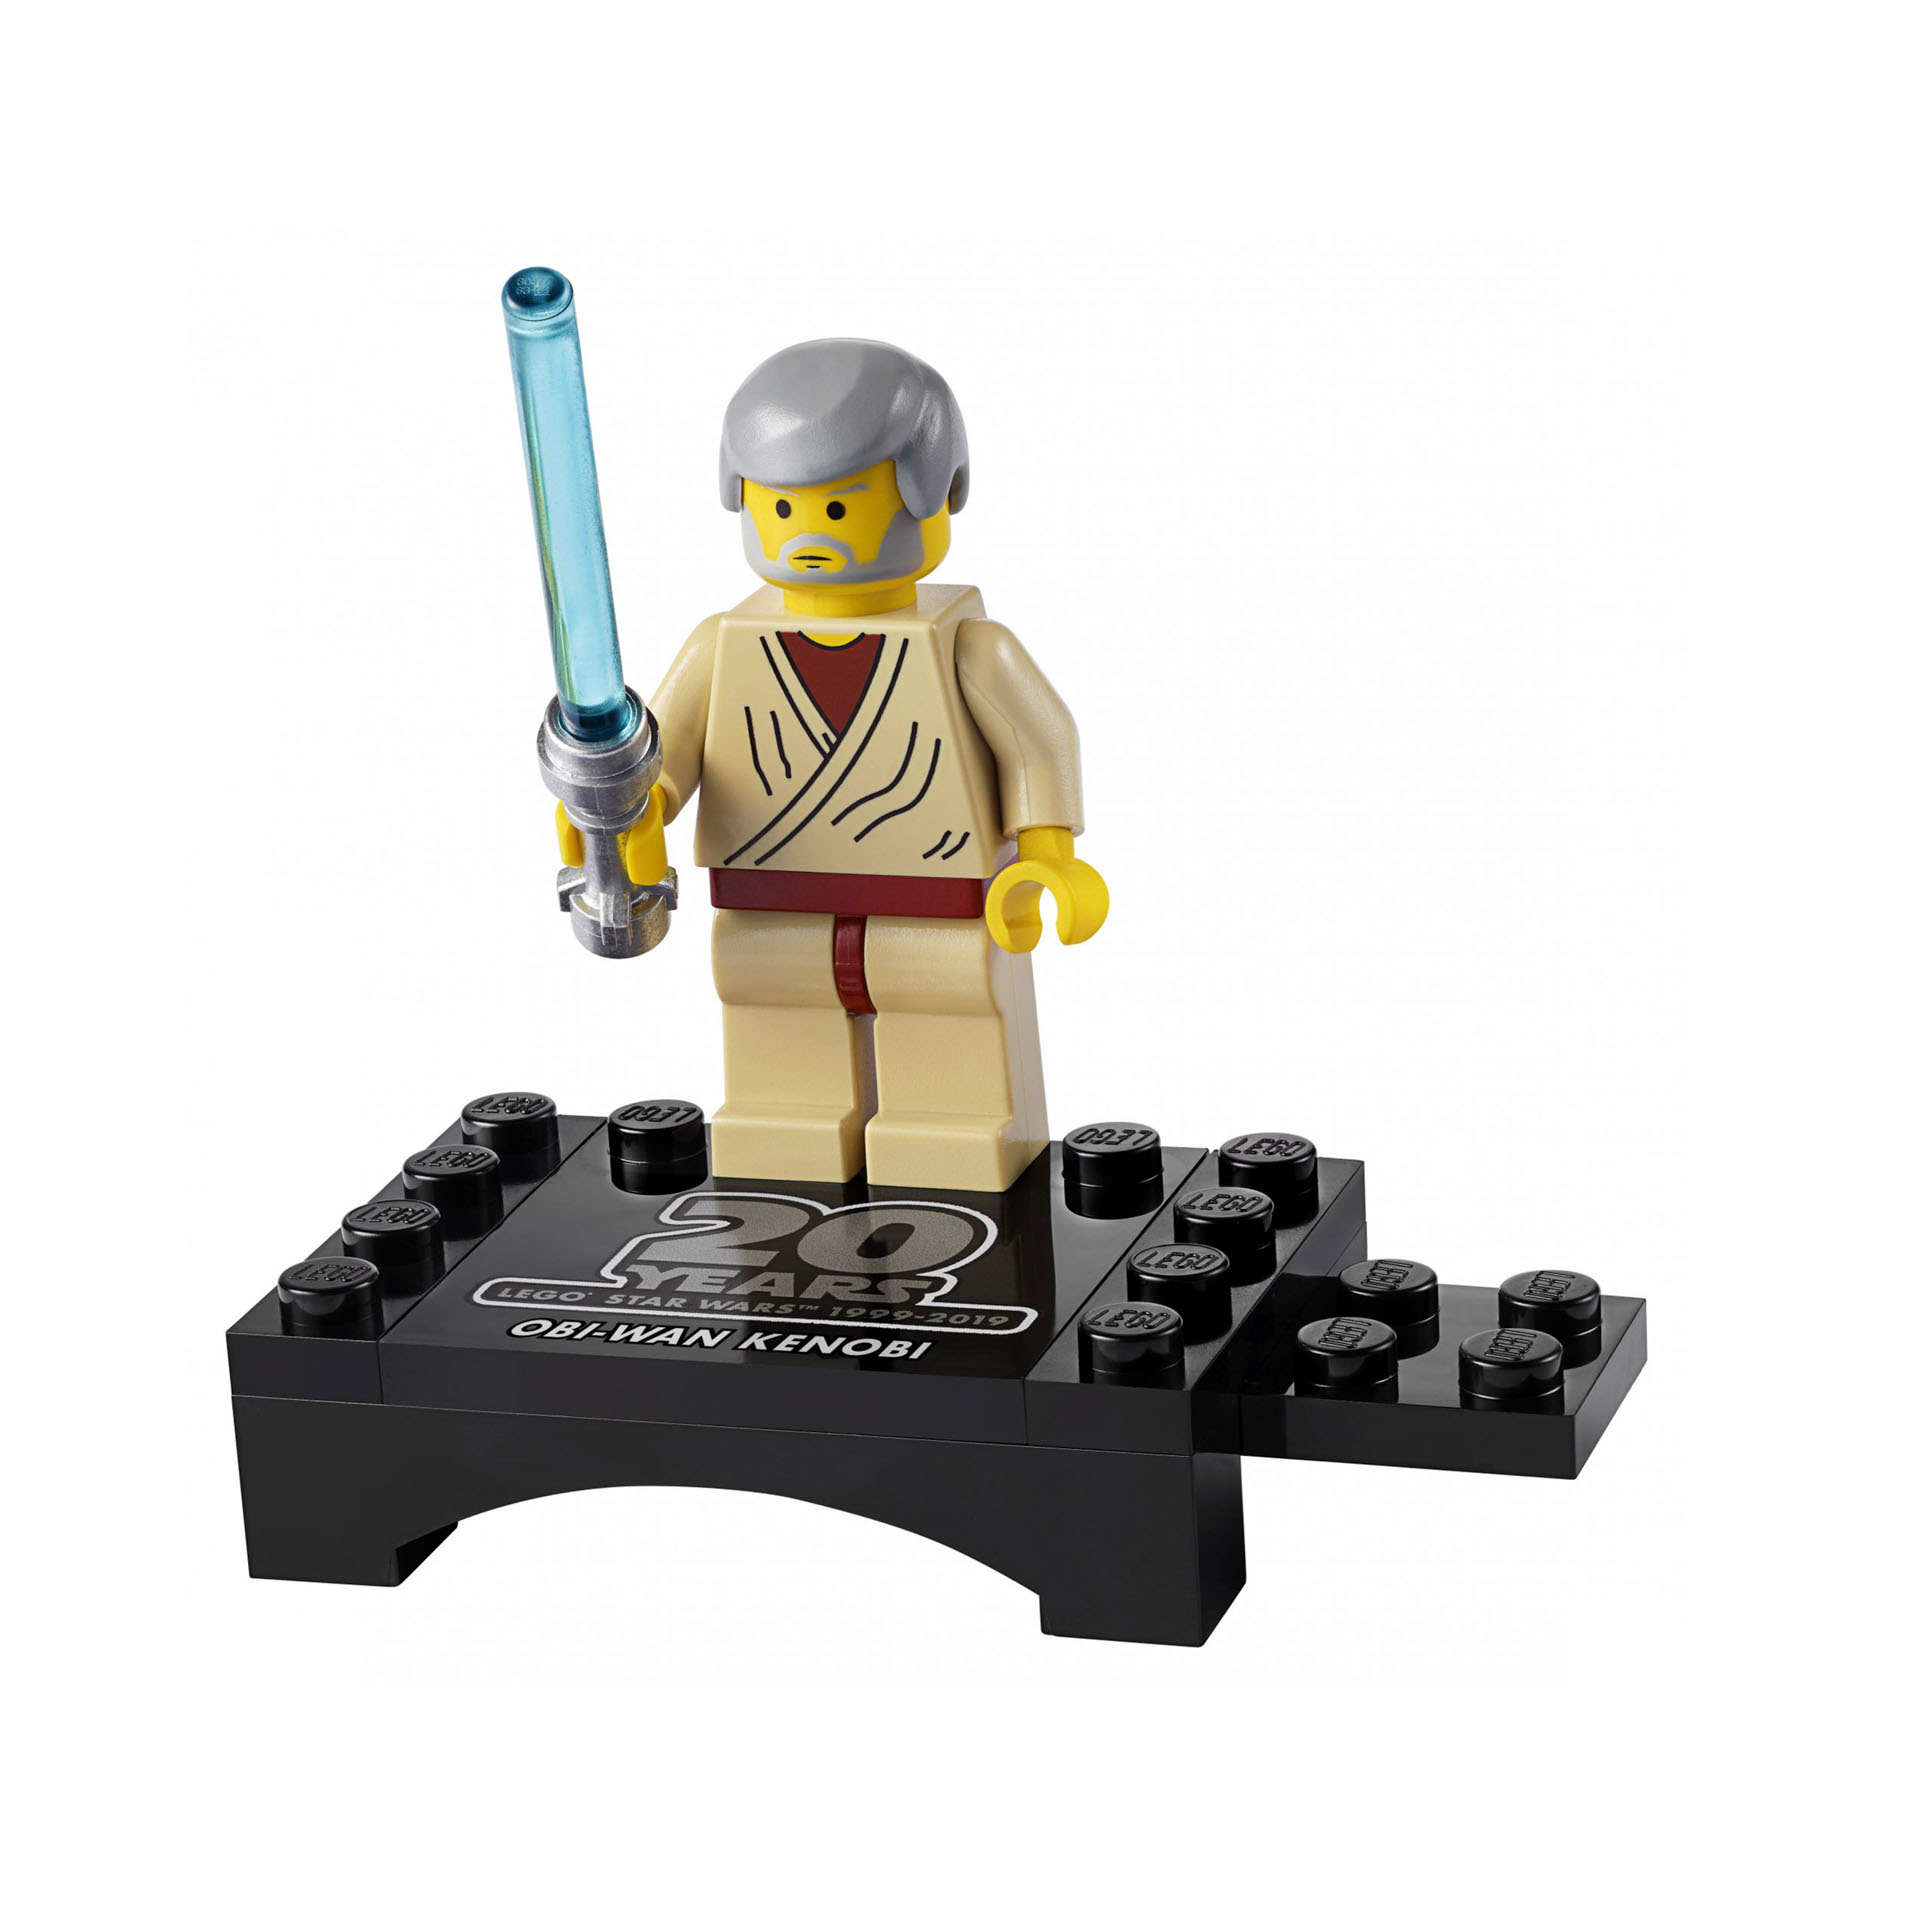 Minifigure da collezione - Obi-Wan Kenobi 30624, , large